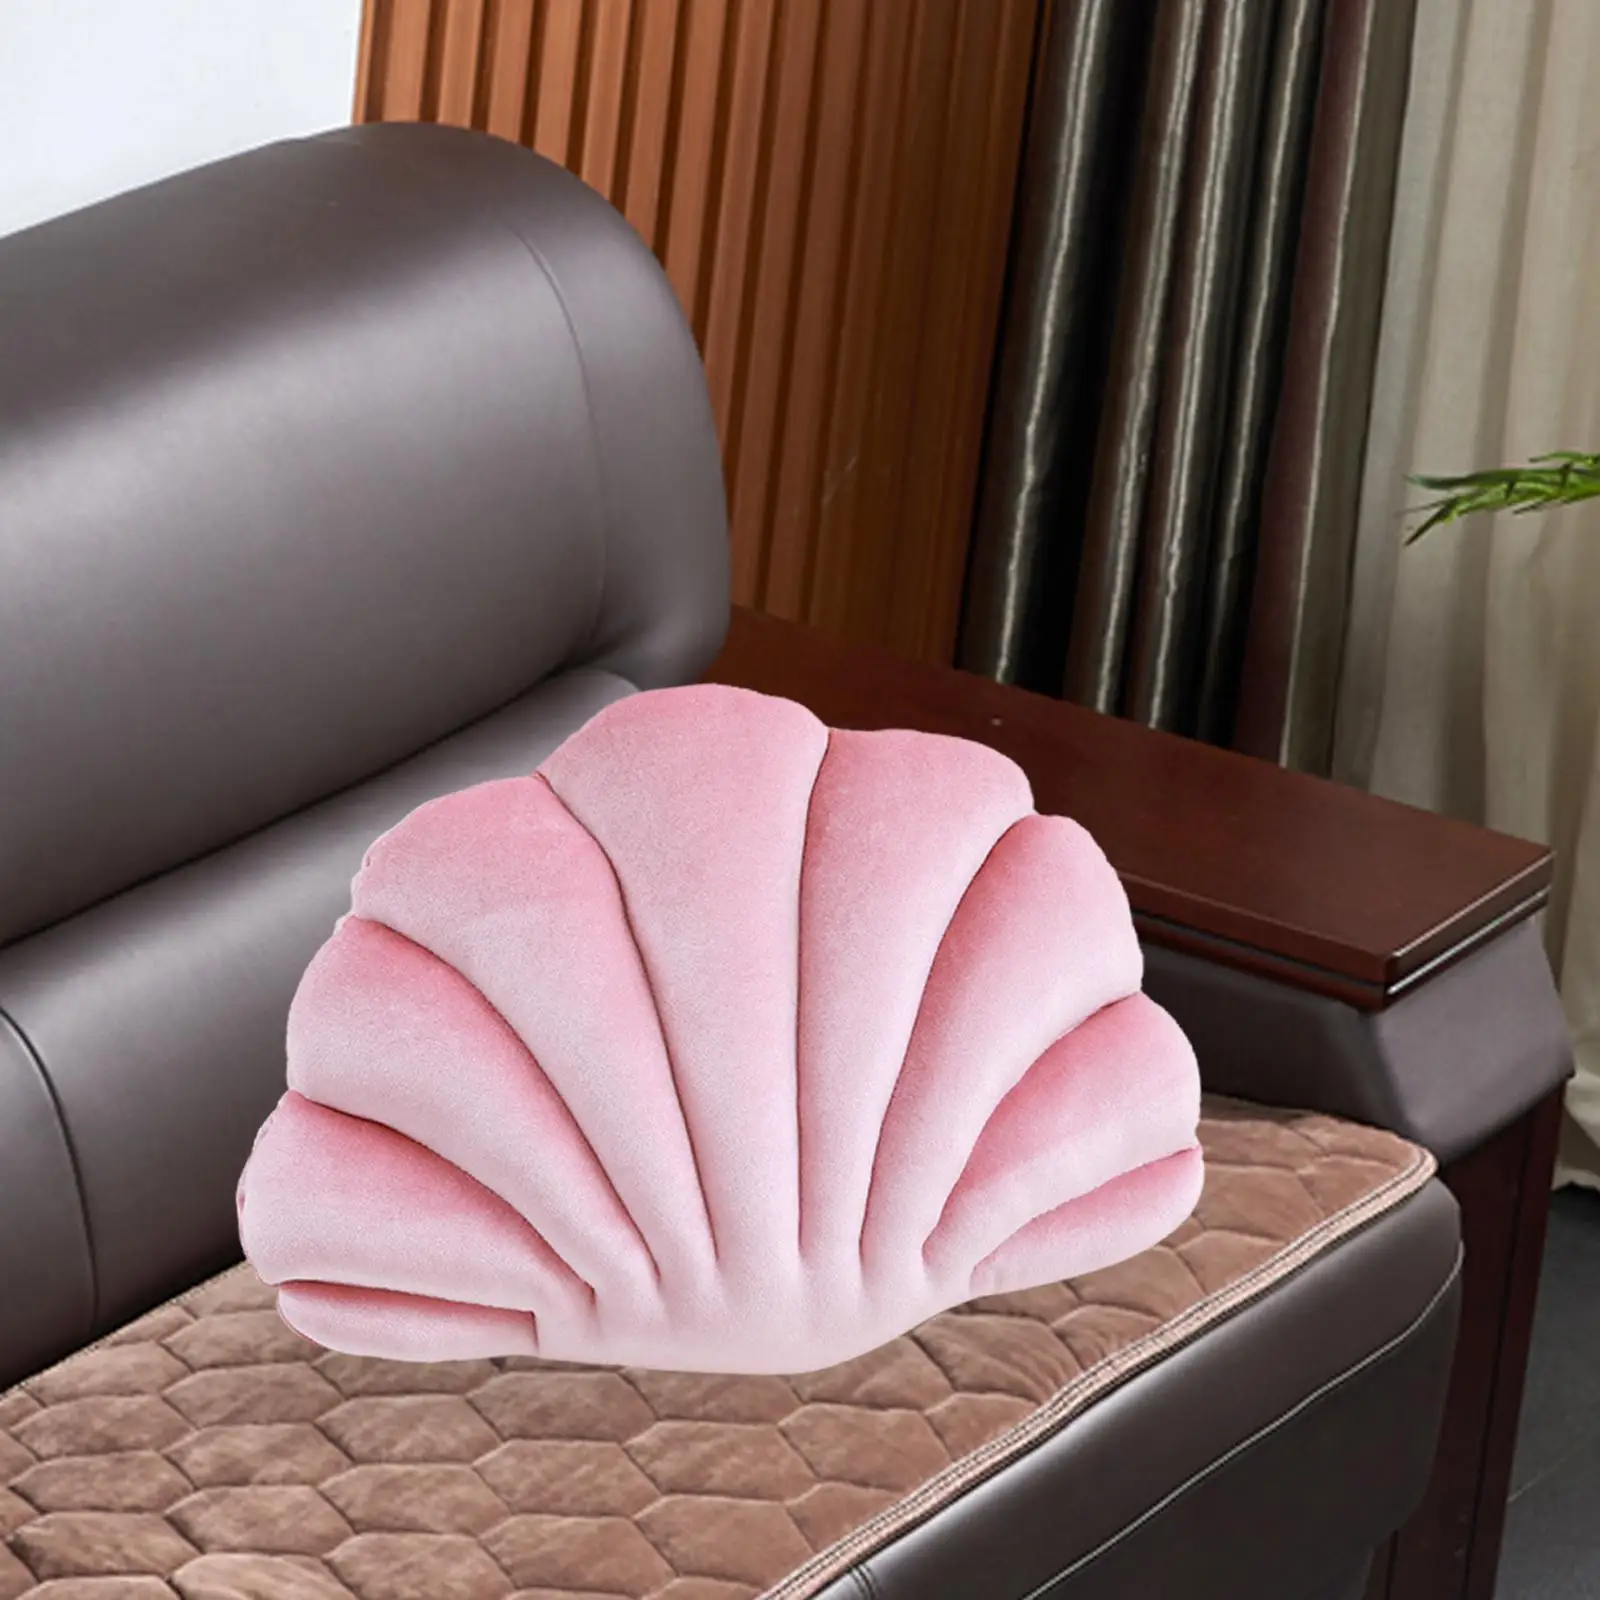 Floor Cushion Beds Home Household Birthday Gifts Decorative Throw Pillow Seashell Pillows Stuffed Pillows for Car Desktop Dorm